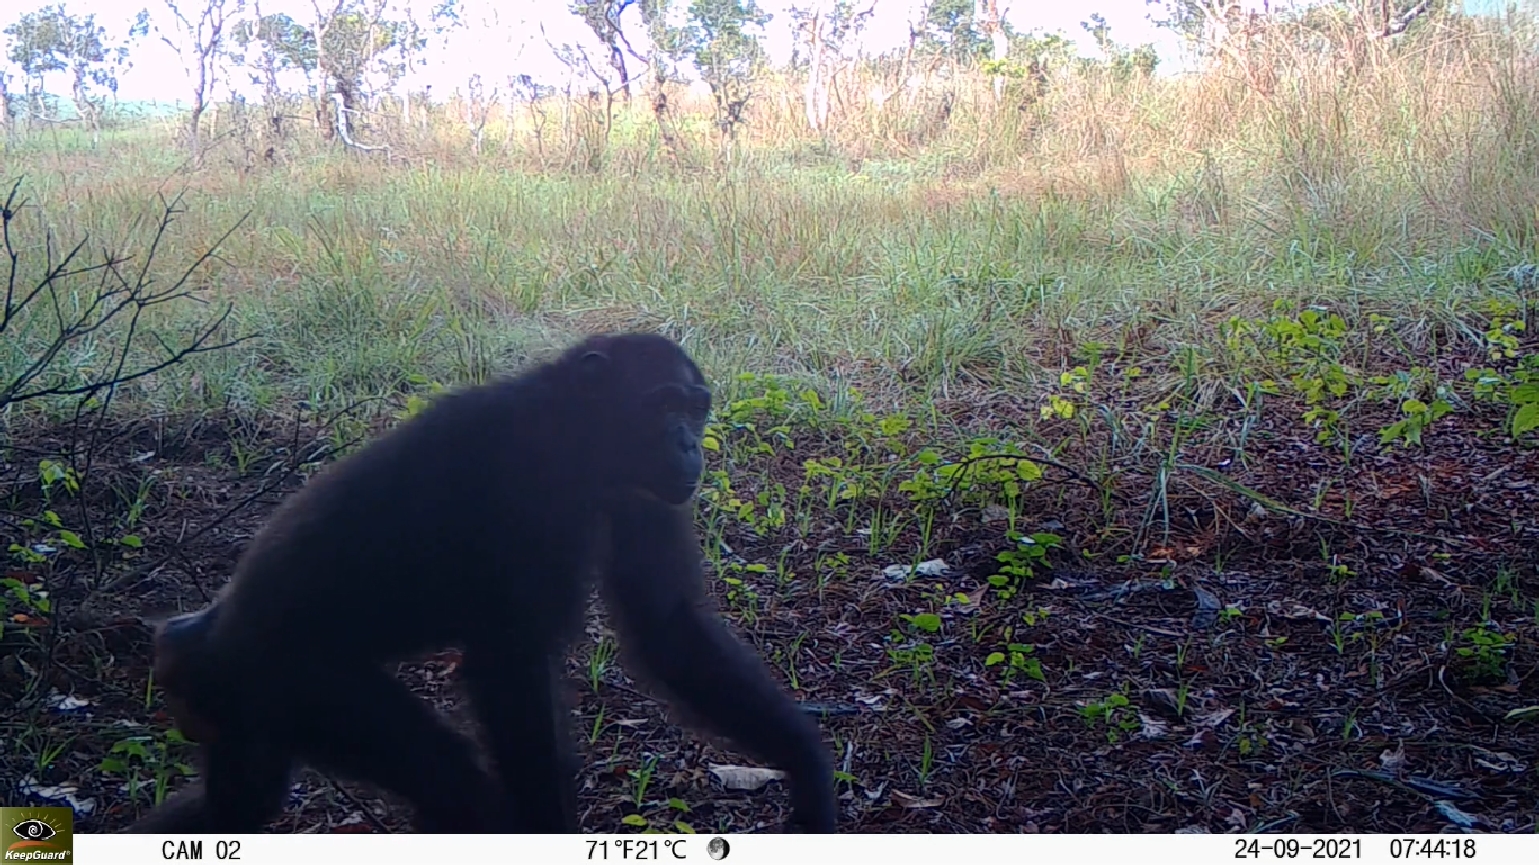 2020A-160 Female Chimpanzee Caught on Camera Trap 24 Sept 2021